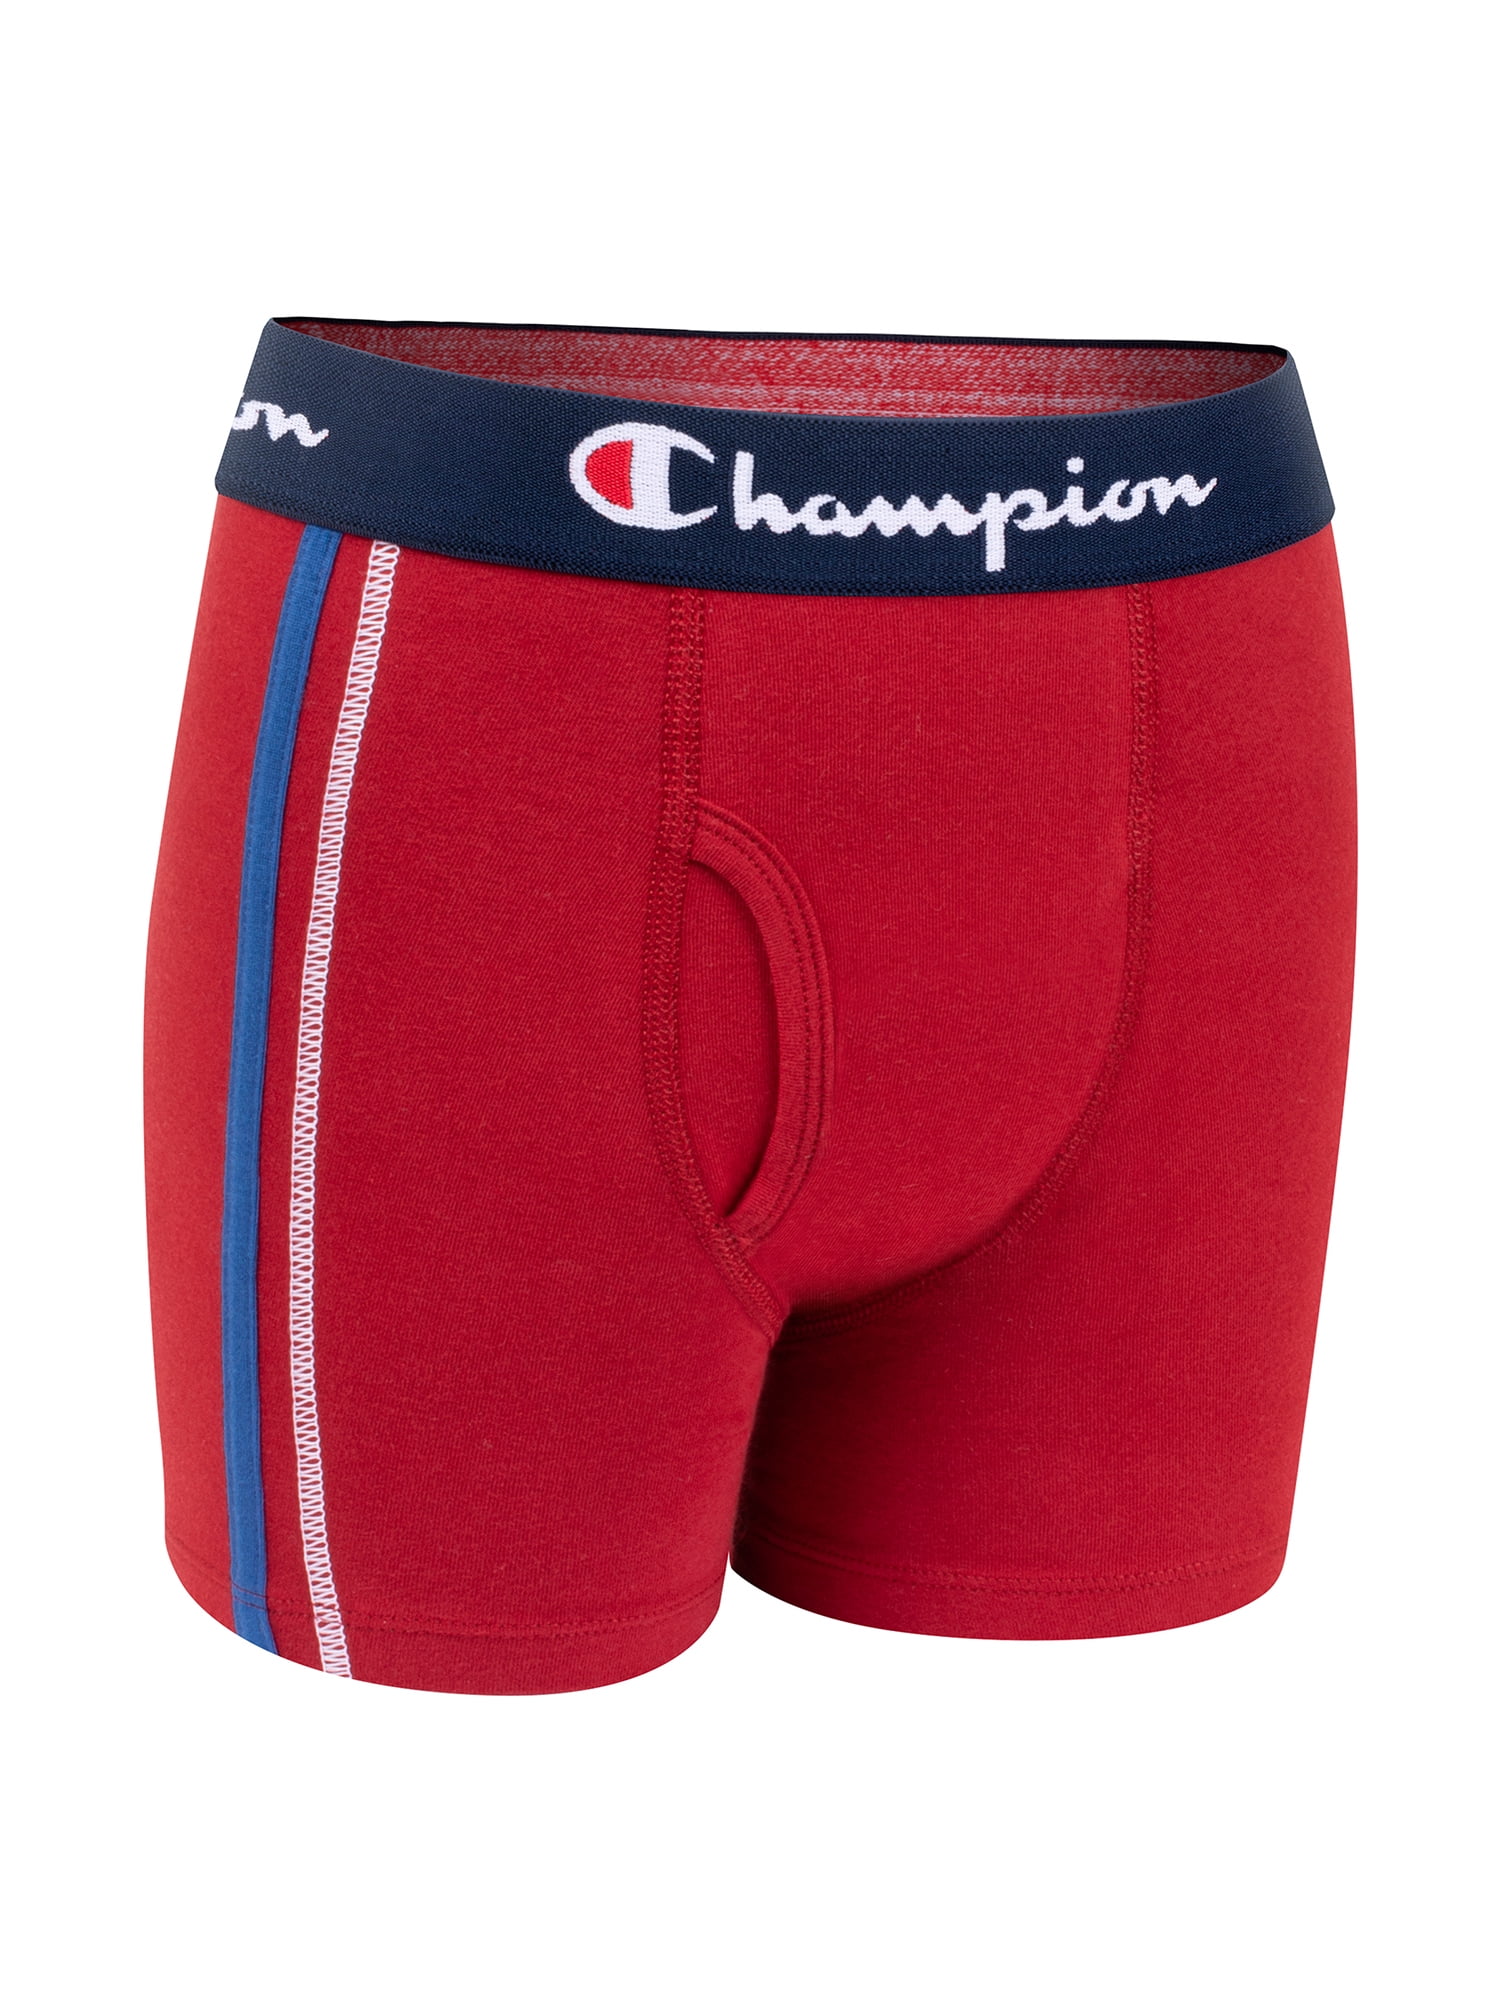 Champion Boys' Cotton Stretch Boxer Briefs 4 Pack, Sizes S-XL